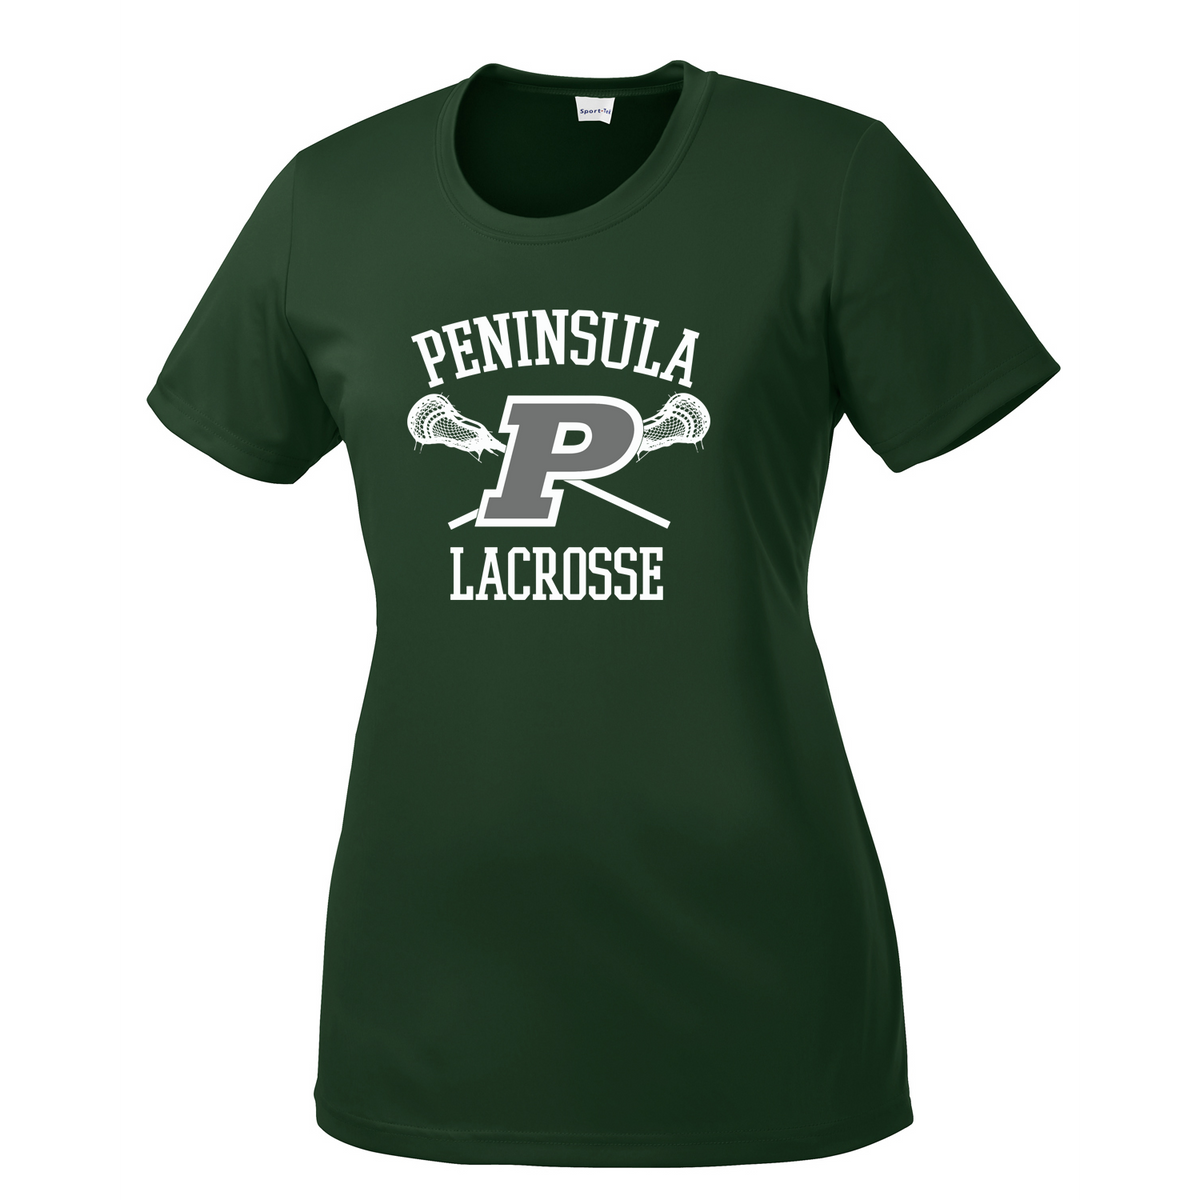 Peninsula Lacrosse Women's Performance Tee